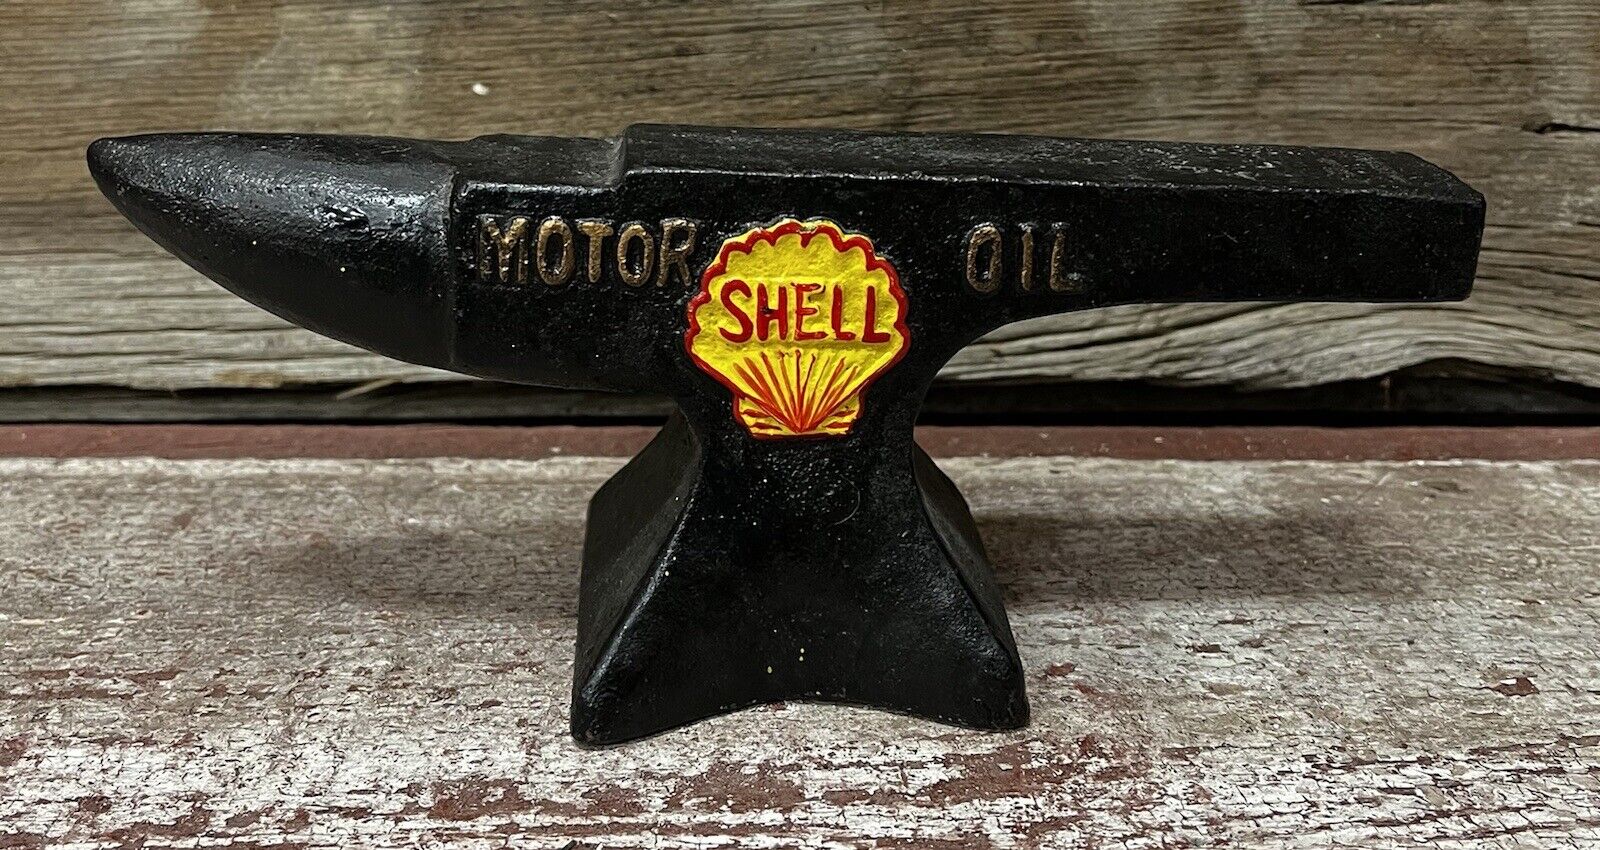 SHELL Gasoline & Oil 1927 Heavy Cast Iron Anvil, 9” Long